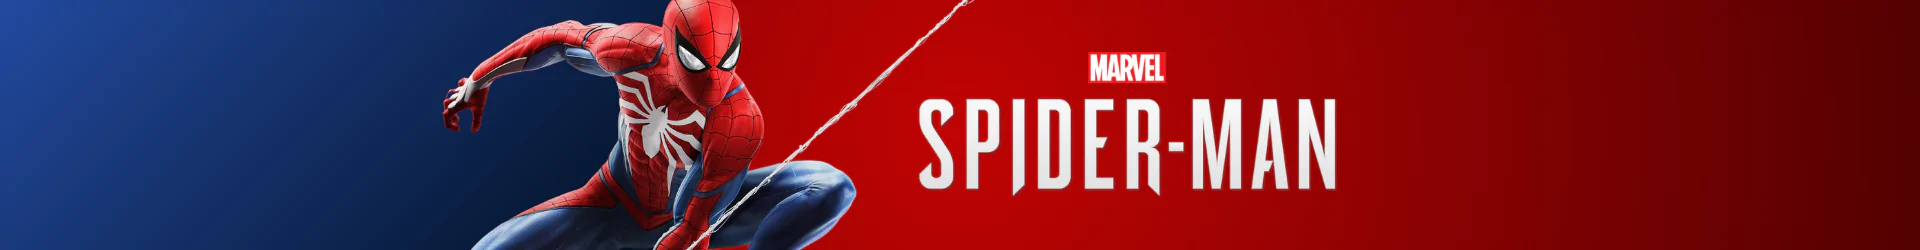 Spider-Man products banner